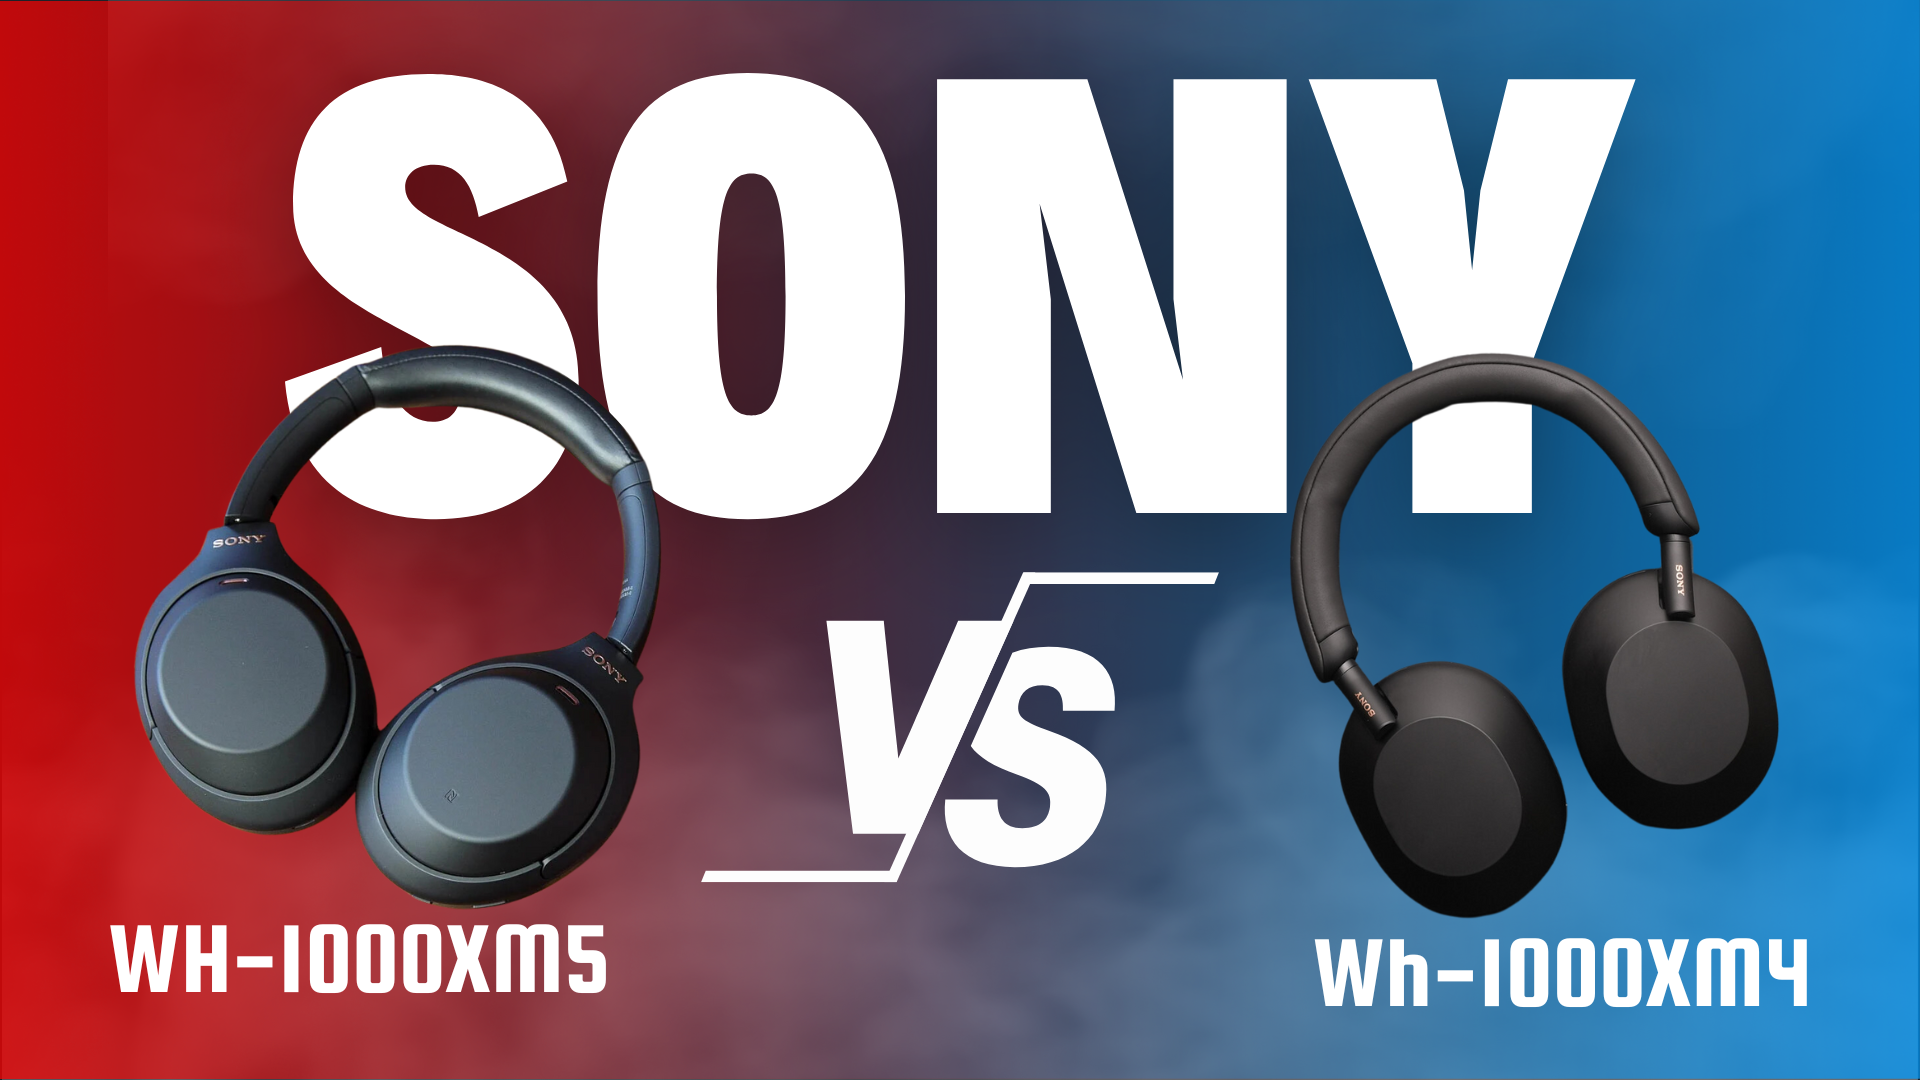 Sony WH-1000XM5 vs Sony WH-1000XM4 - SoundGuys